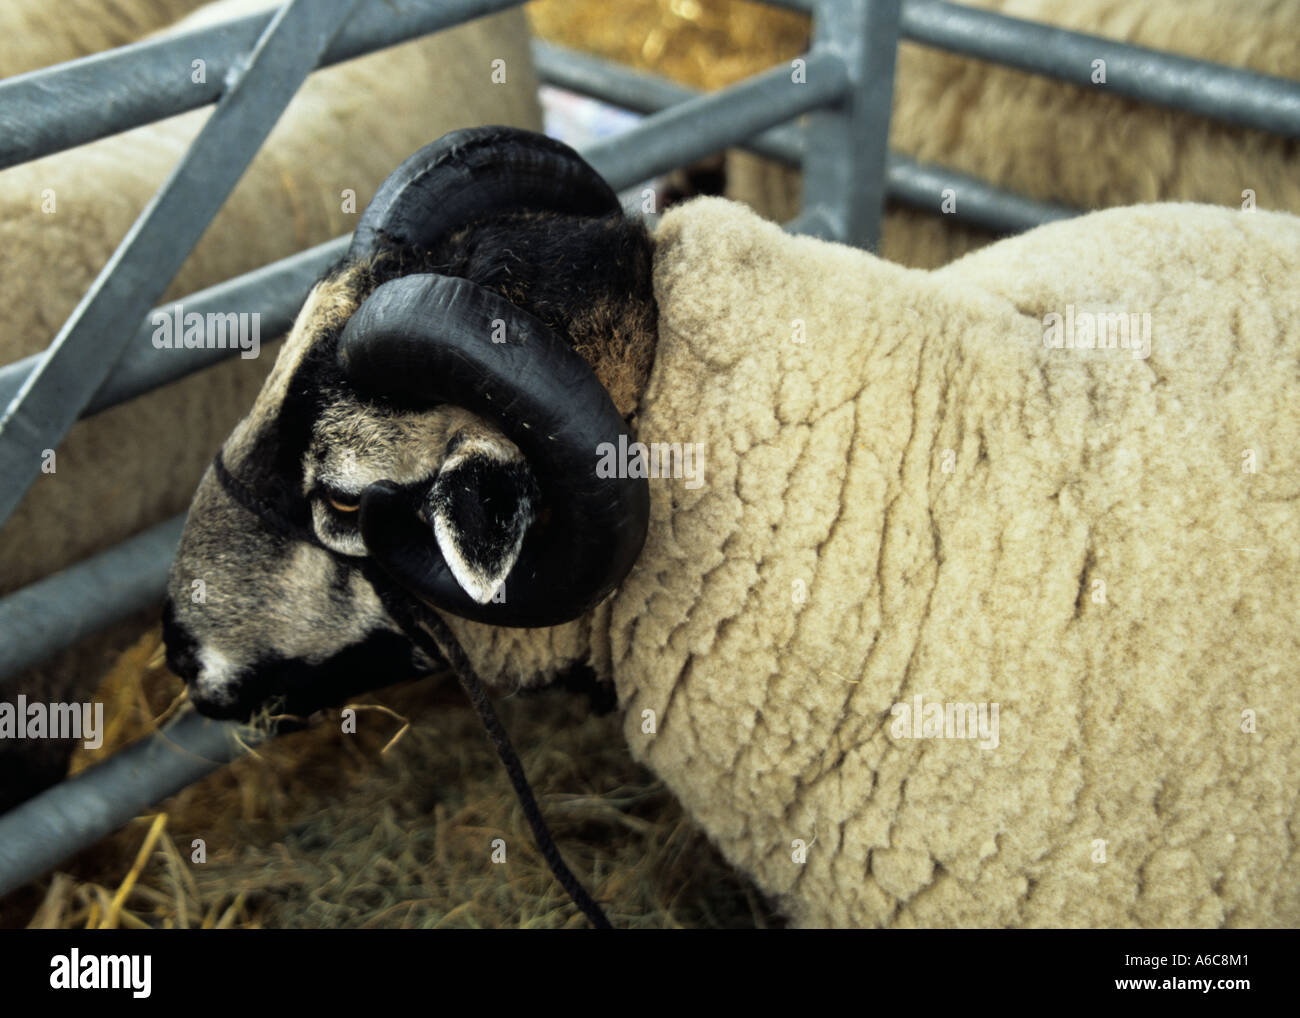 ANGLESEY SHOW GWALCHMAI Agosto un tejón enfrenta ovejas de las montañas de Gales con maravillosos cuernos rizado Foto de stock